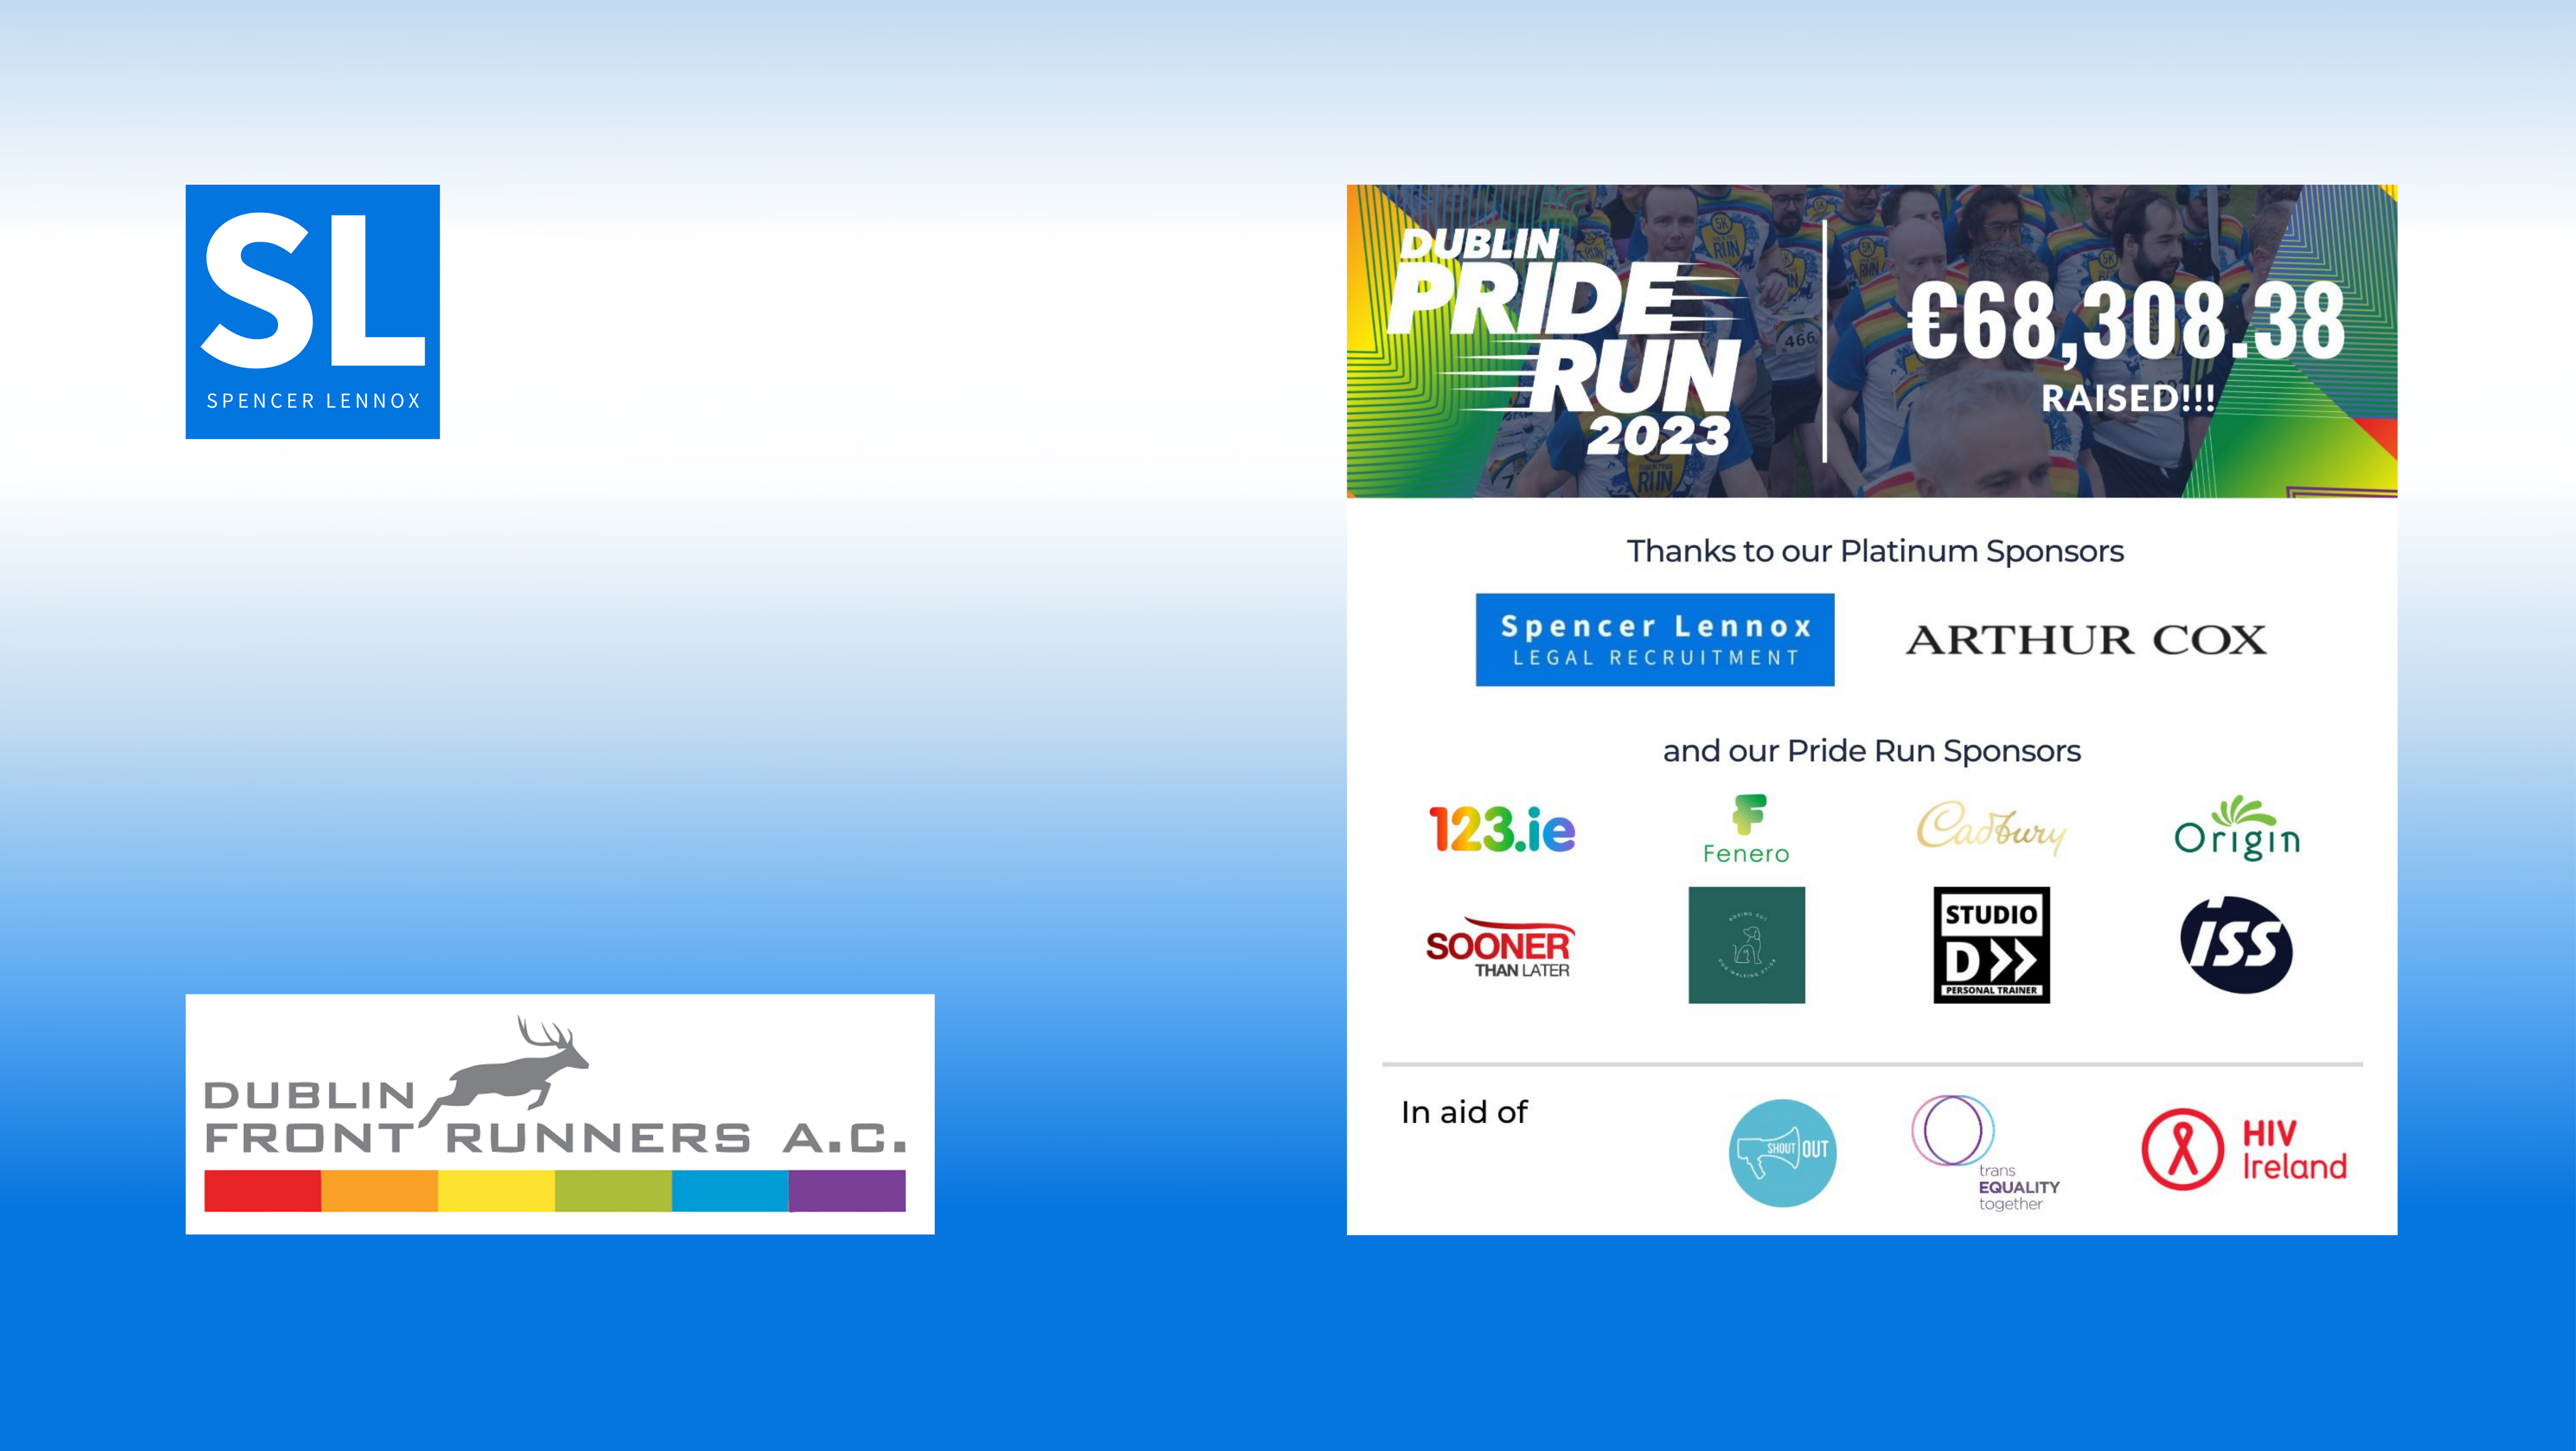 Dublin Pride Run raises a record breaking €68,308 for LGBTQ+ charities.